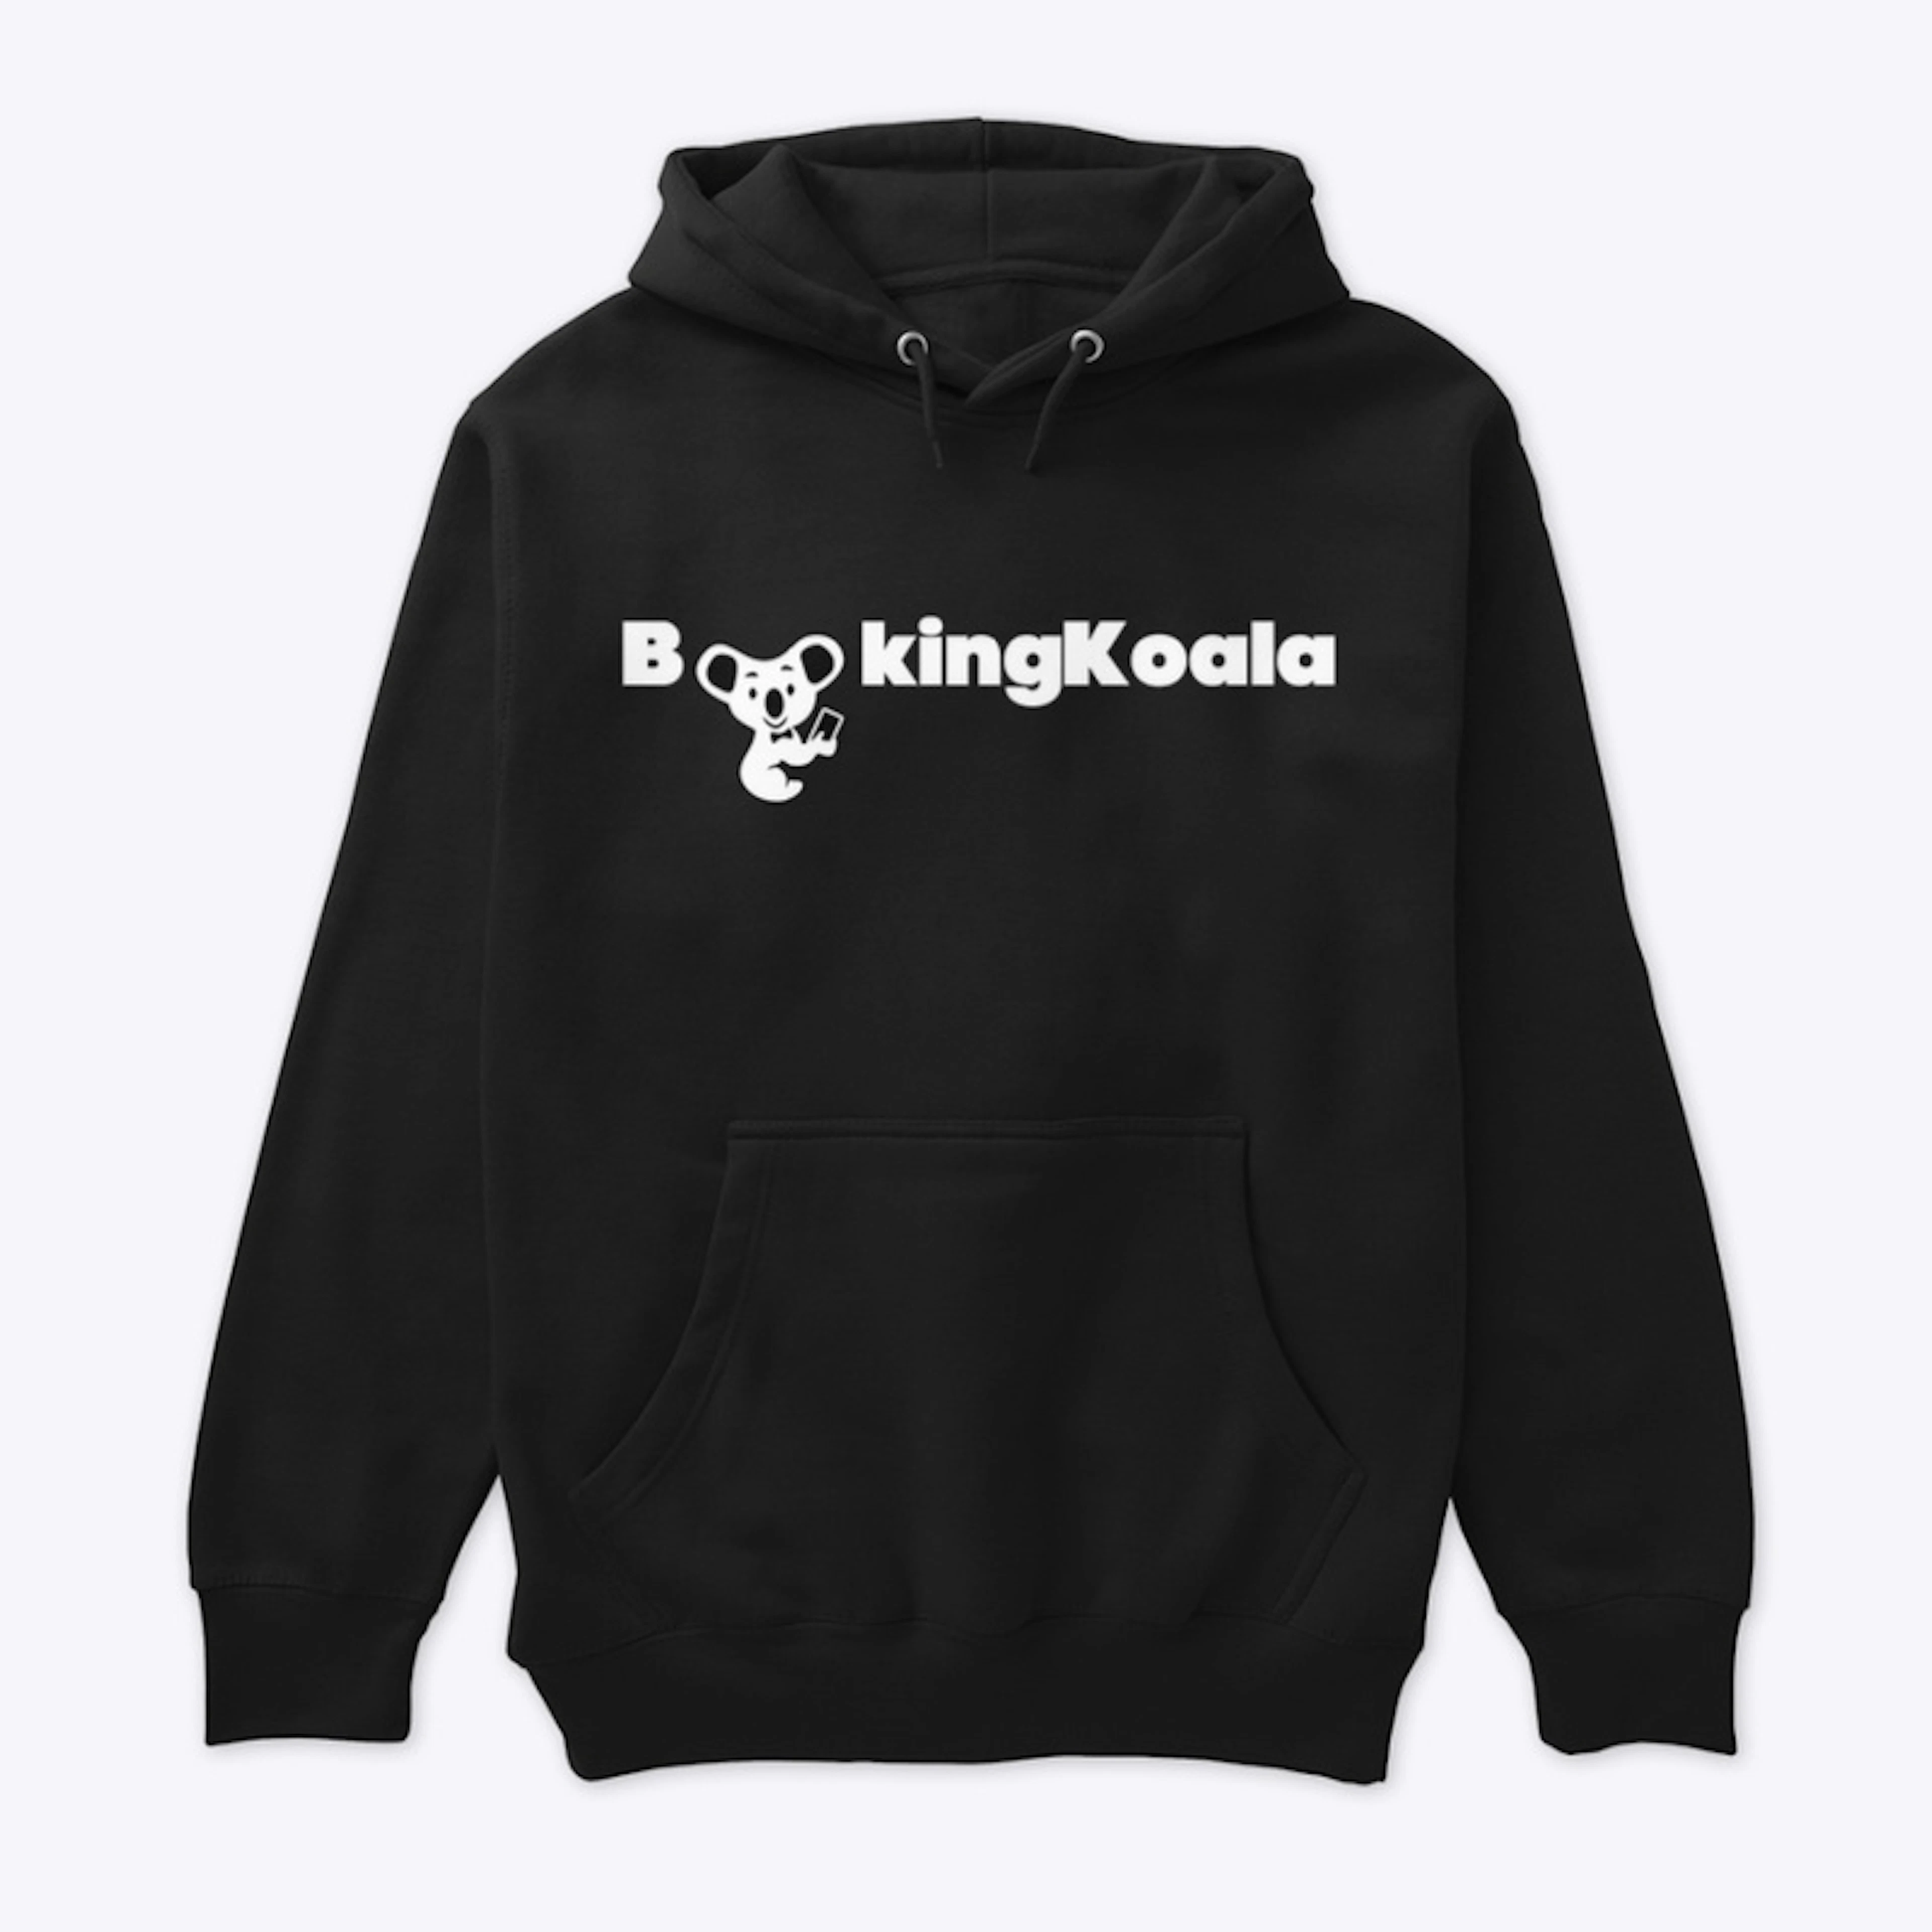 BookingKoala Black Collection